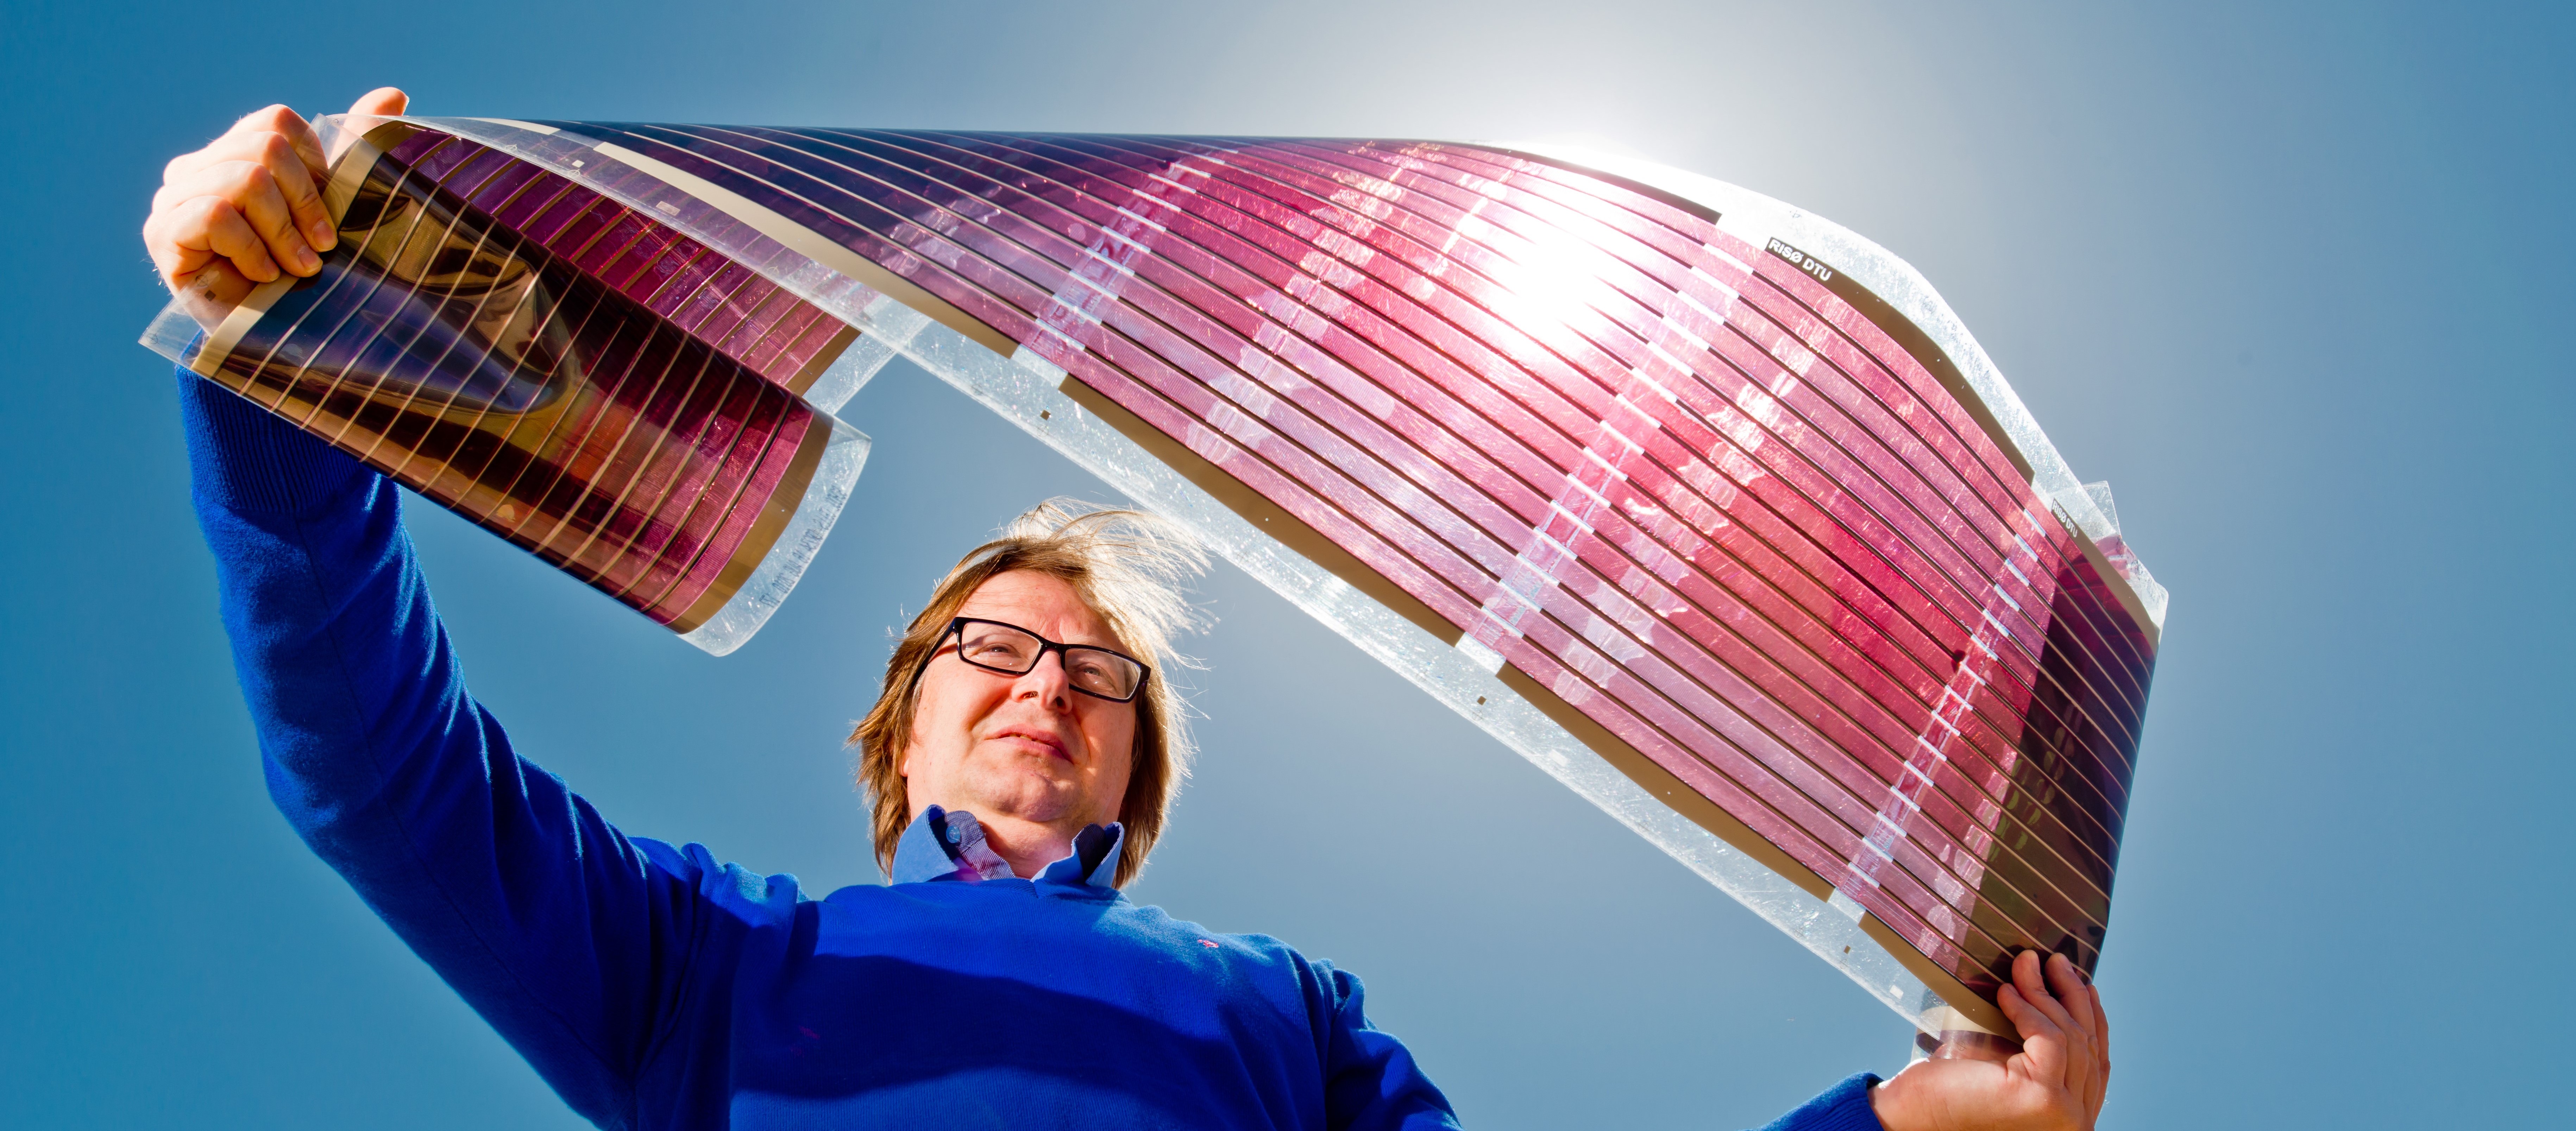 Prof. Eugene Katz of the National Solar Energy Center demonstrates flexible photovoltaic surfaces